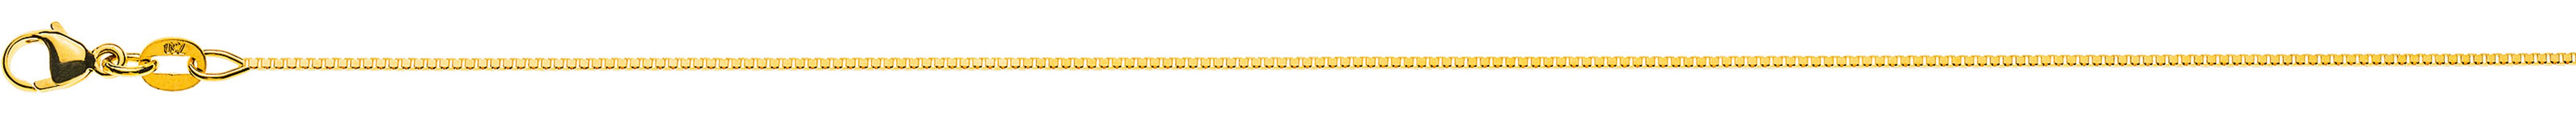 AURONOS Prestige Necklace yellow gold 18K Venetian chain diamond 60cm 0.8mm